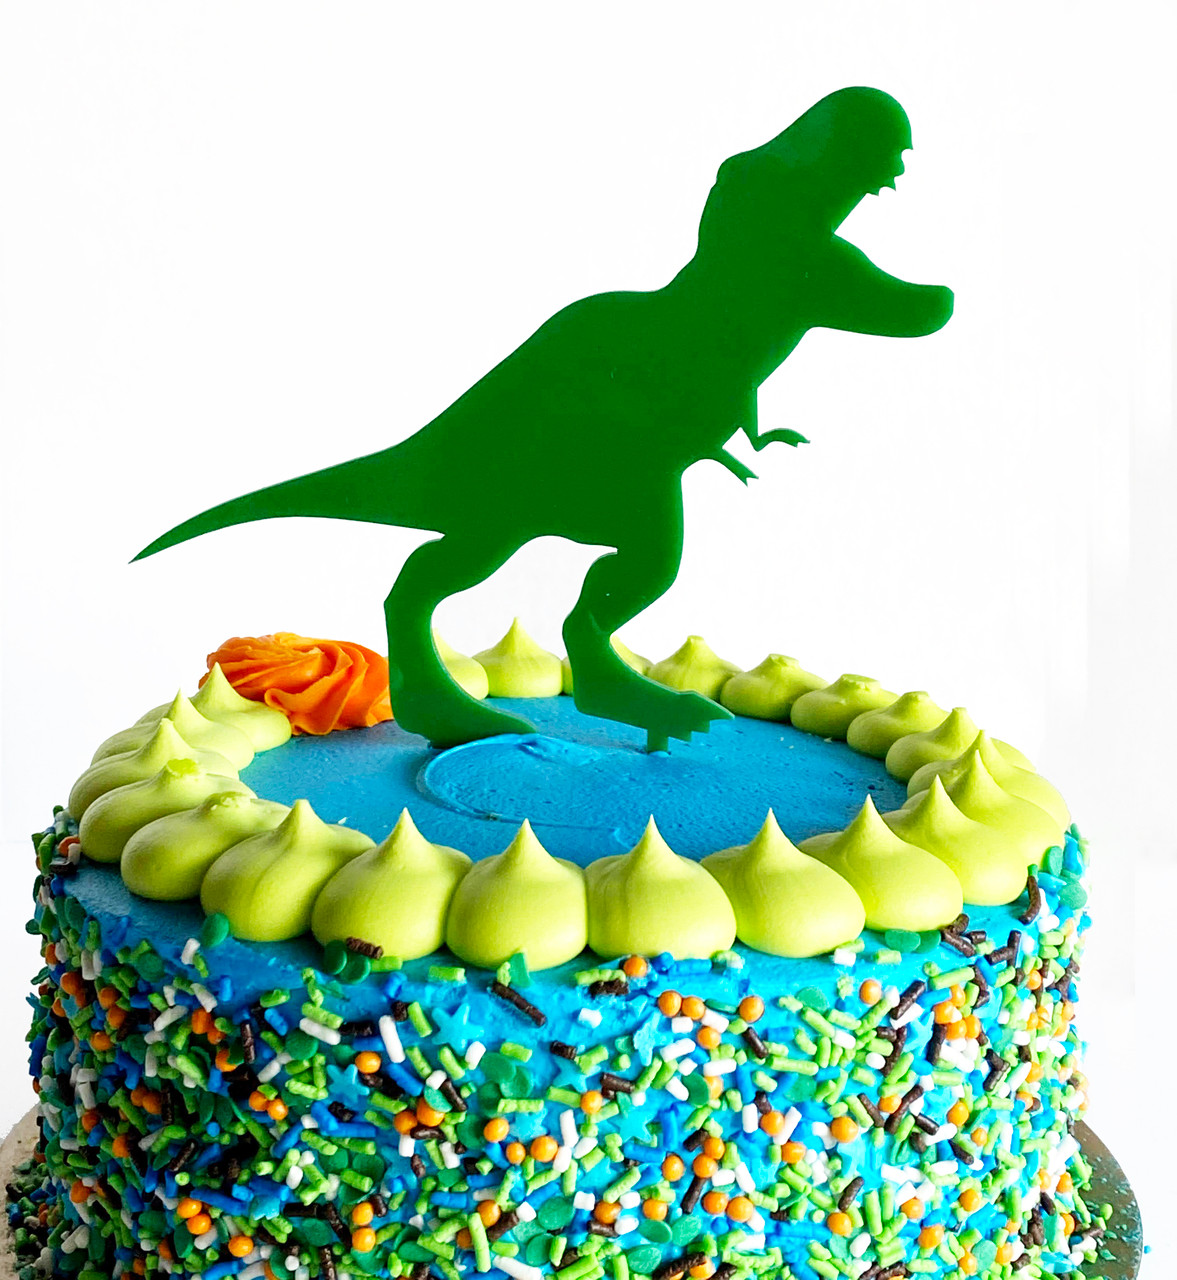 Jurassic World Camp Cretaceous Fan Makes a Hyper-Realistic T-Rex Cake